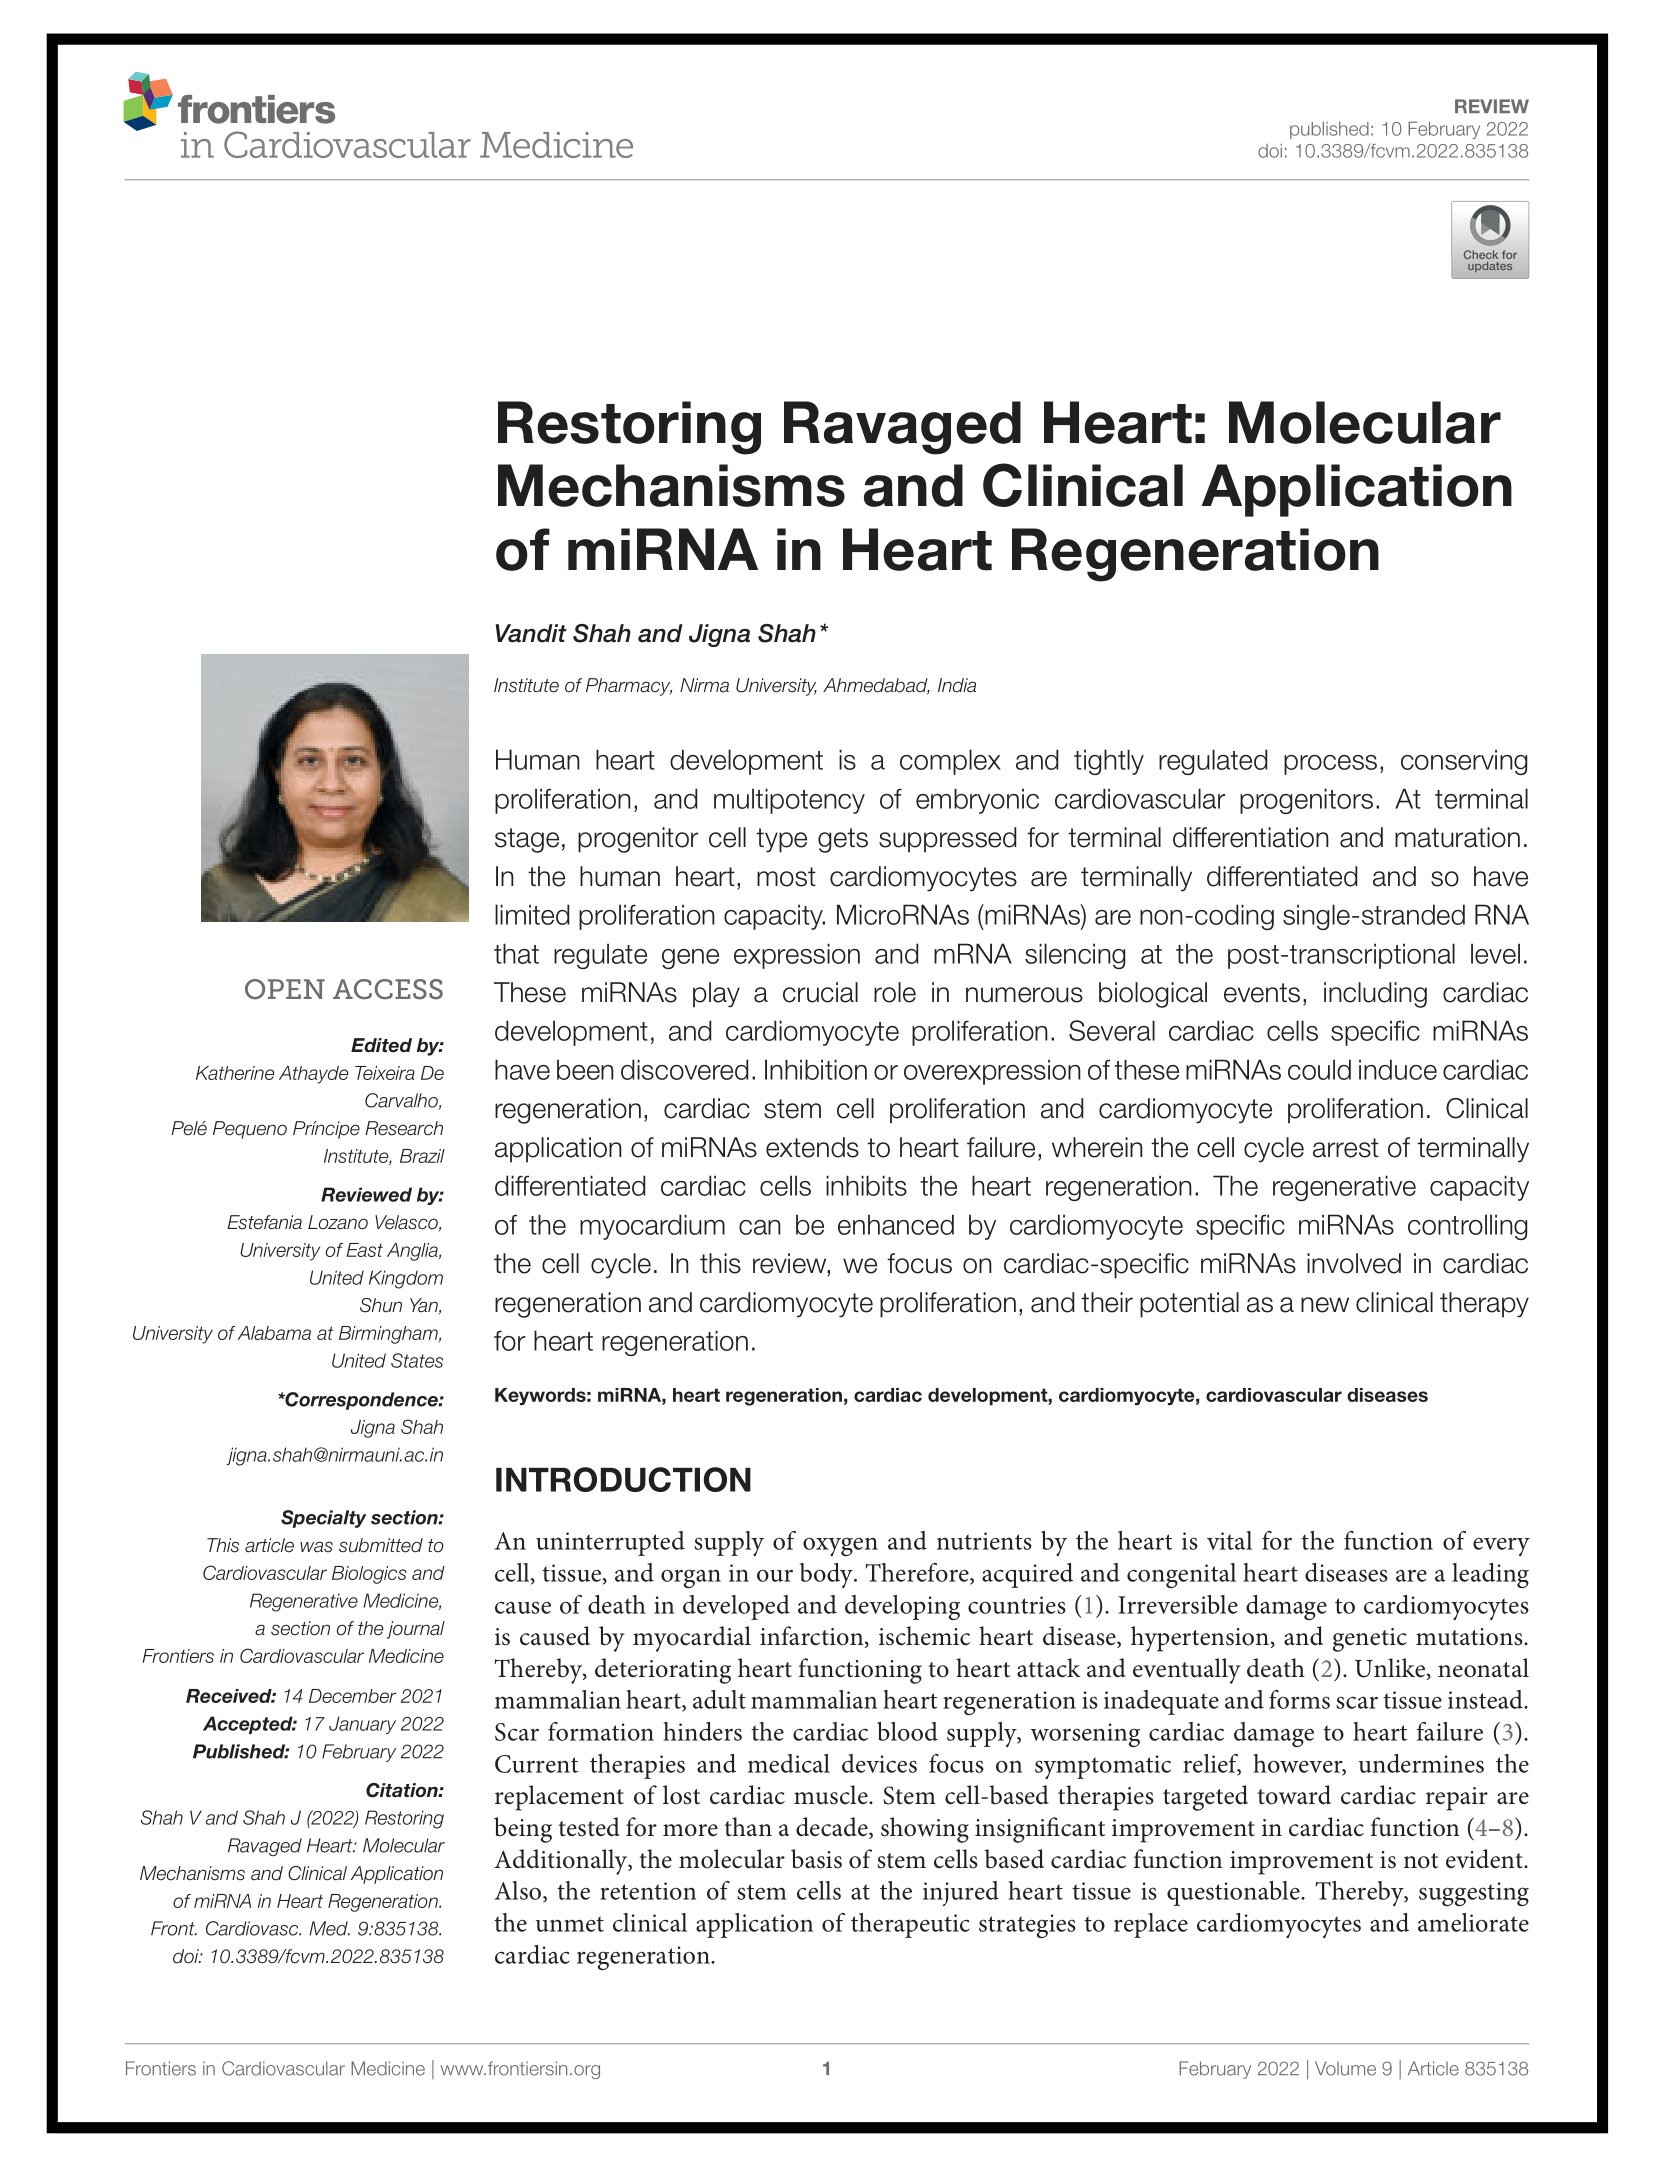 Restoring Ravaged Heart: Molecular Mechanisms and Clinical Application of miRNA in Heart Regeneration